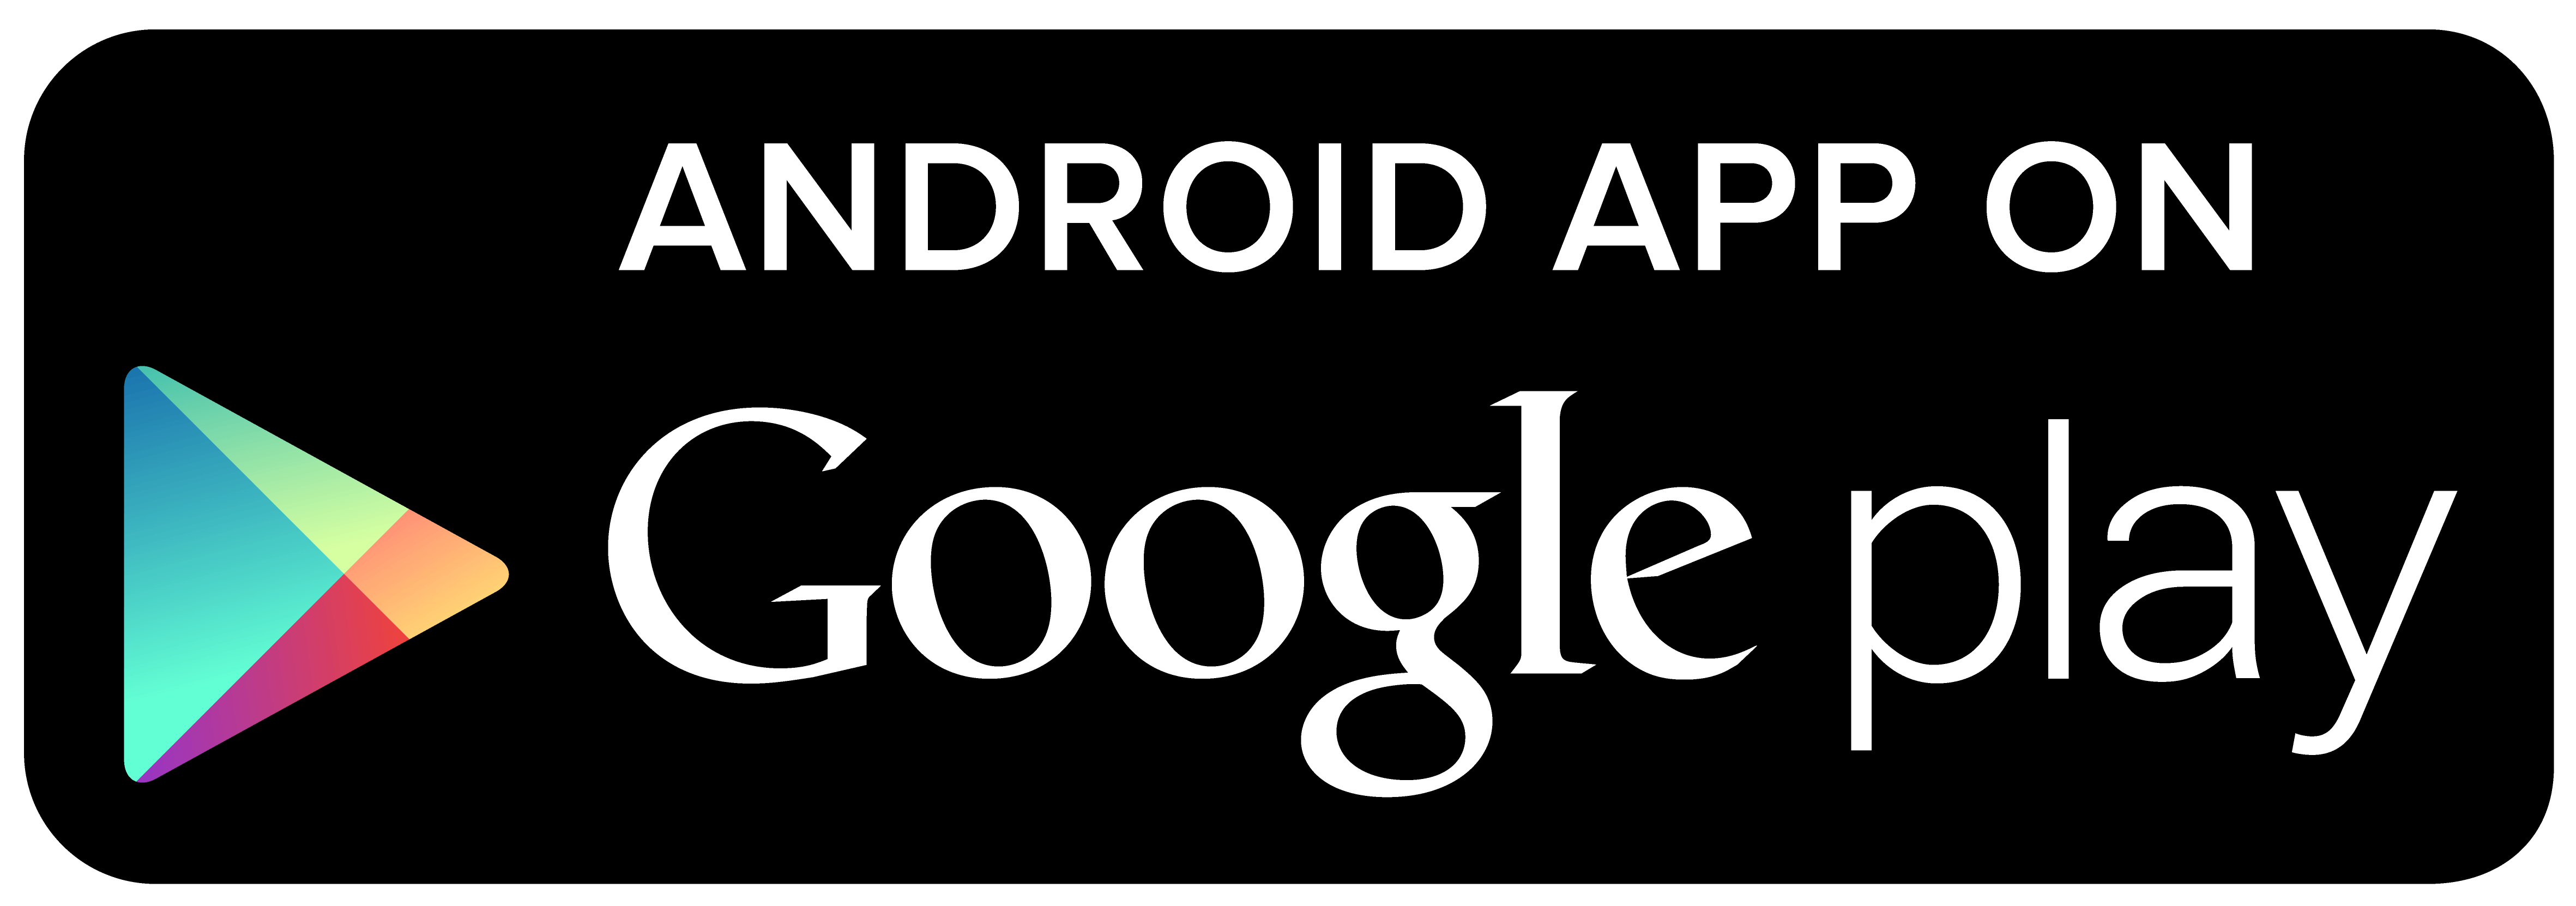 Android Store Logo - Macquarie University